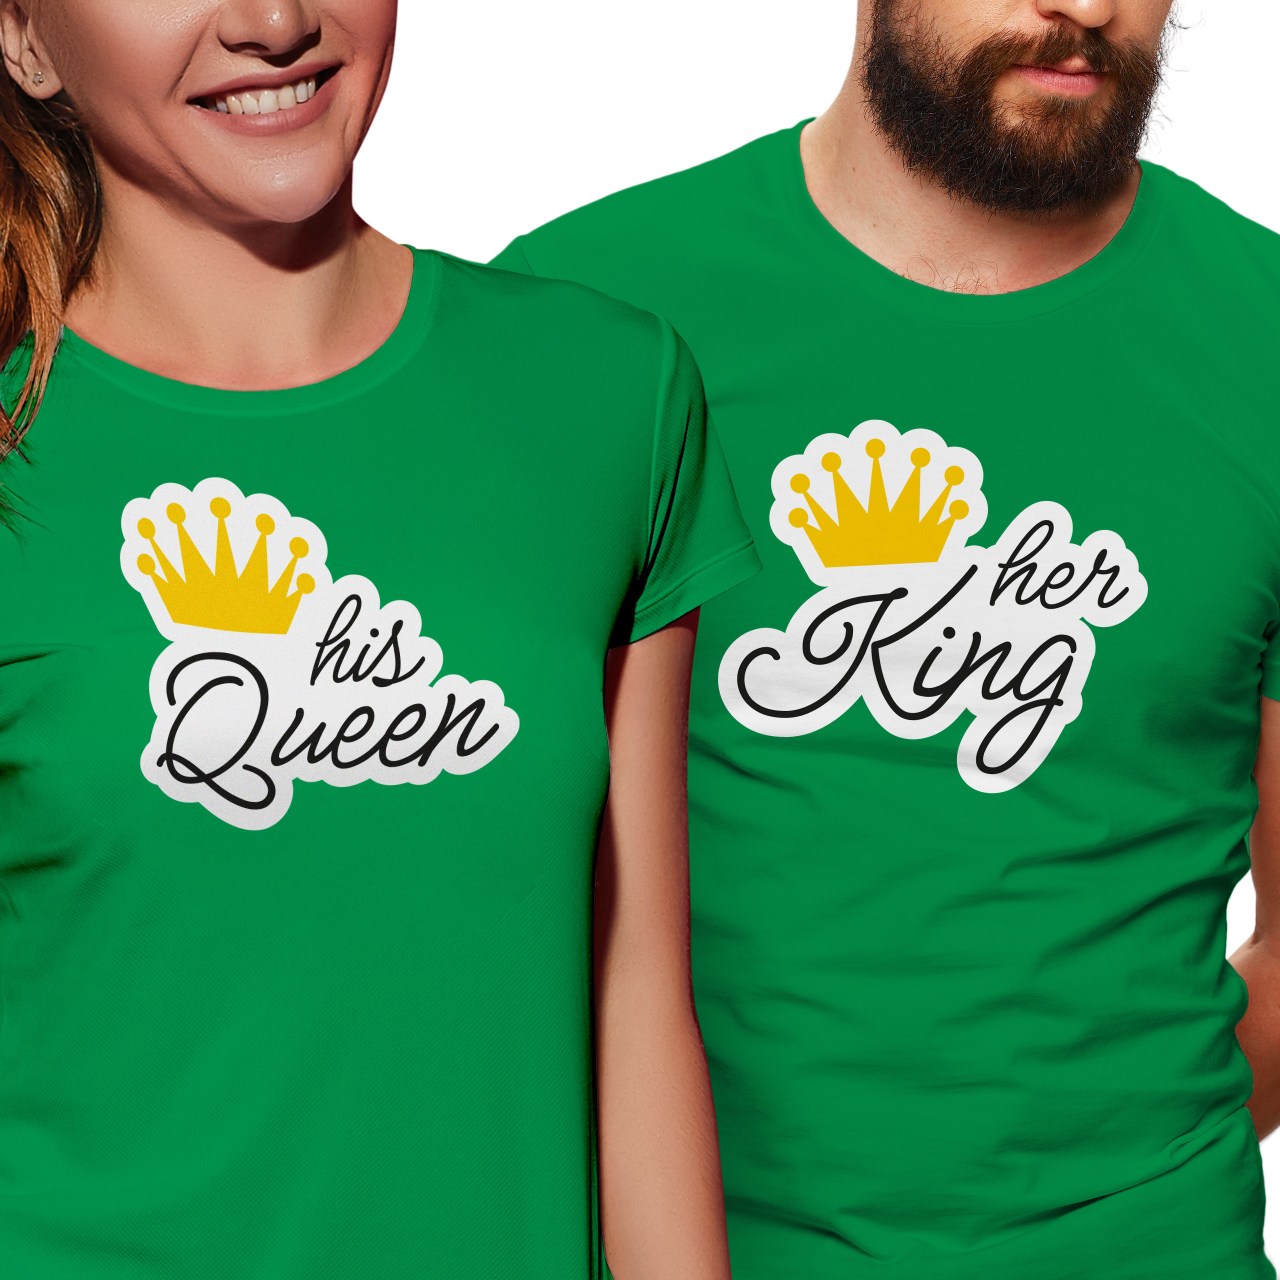 Dámské tričko s potiskem “His Queen”